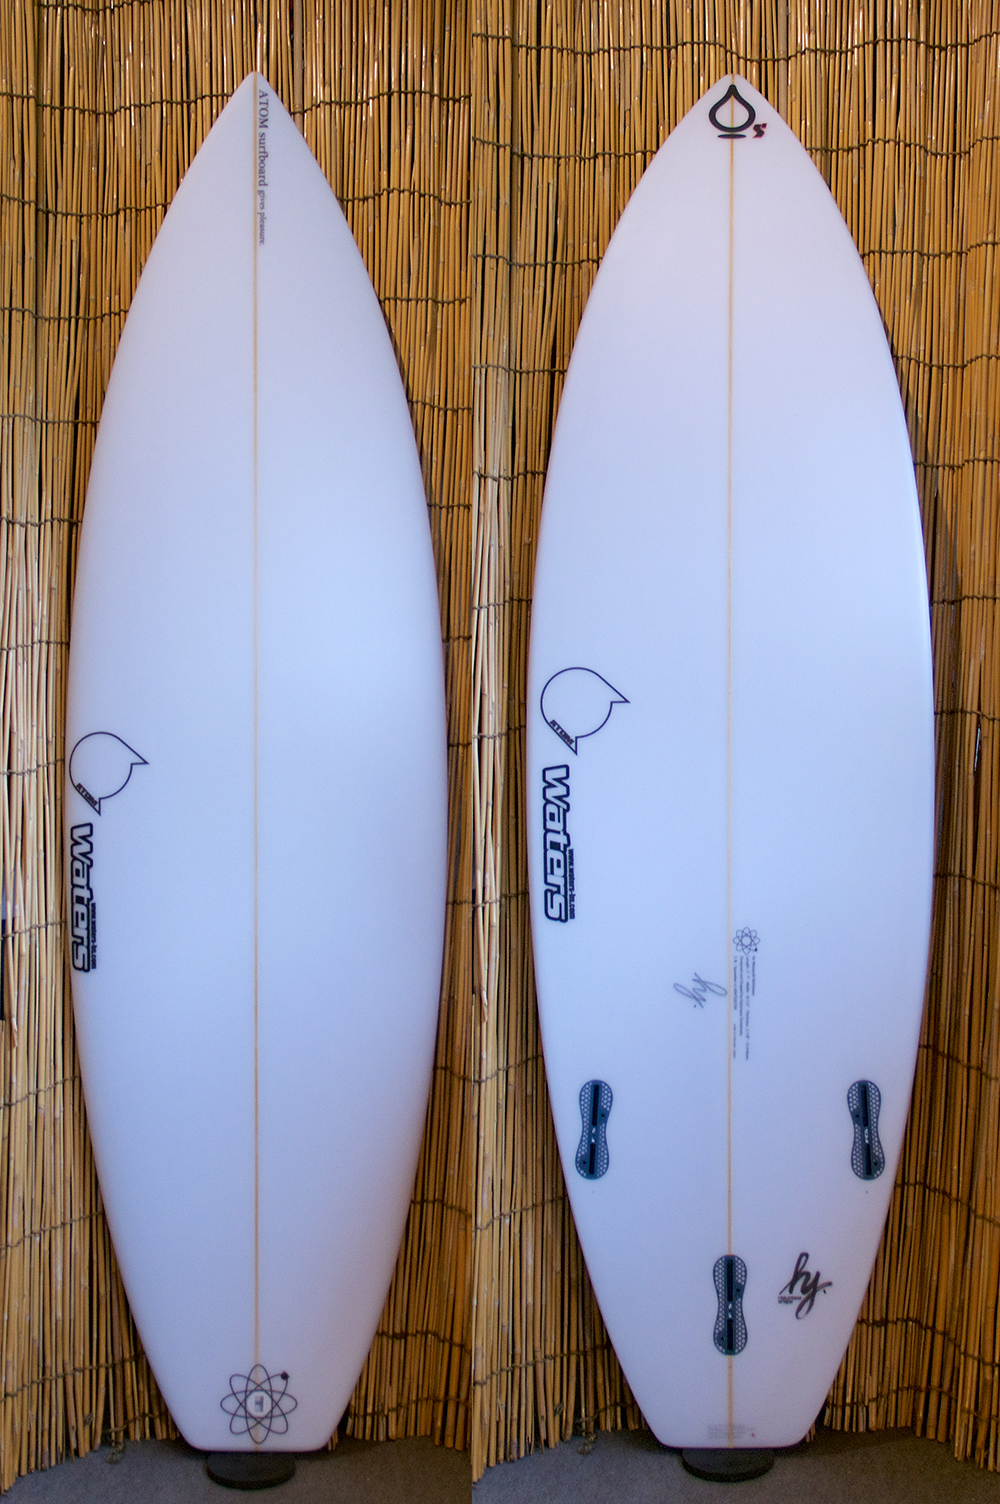 ATOM Surfboard Squawker2.0 model